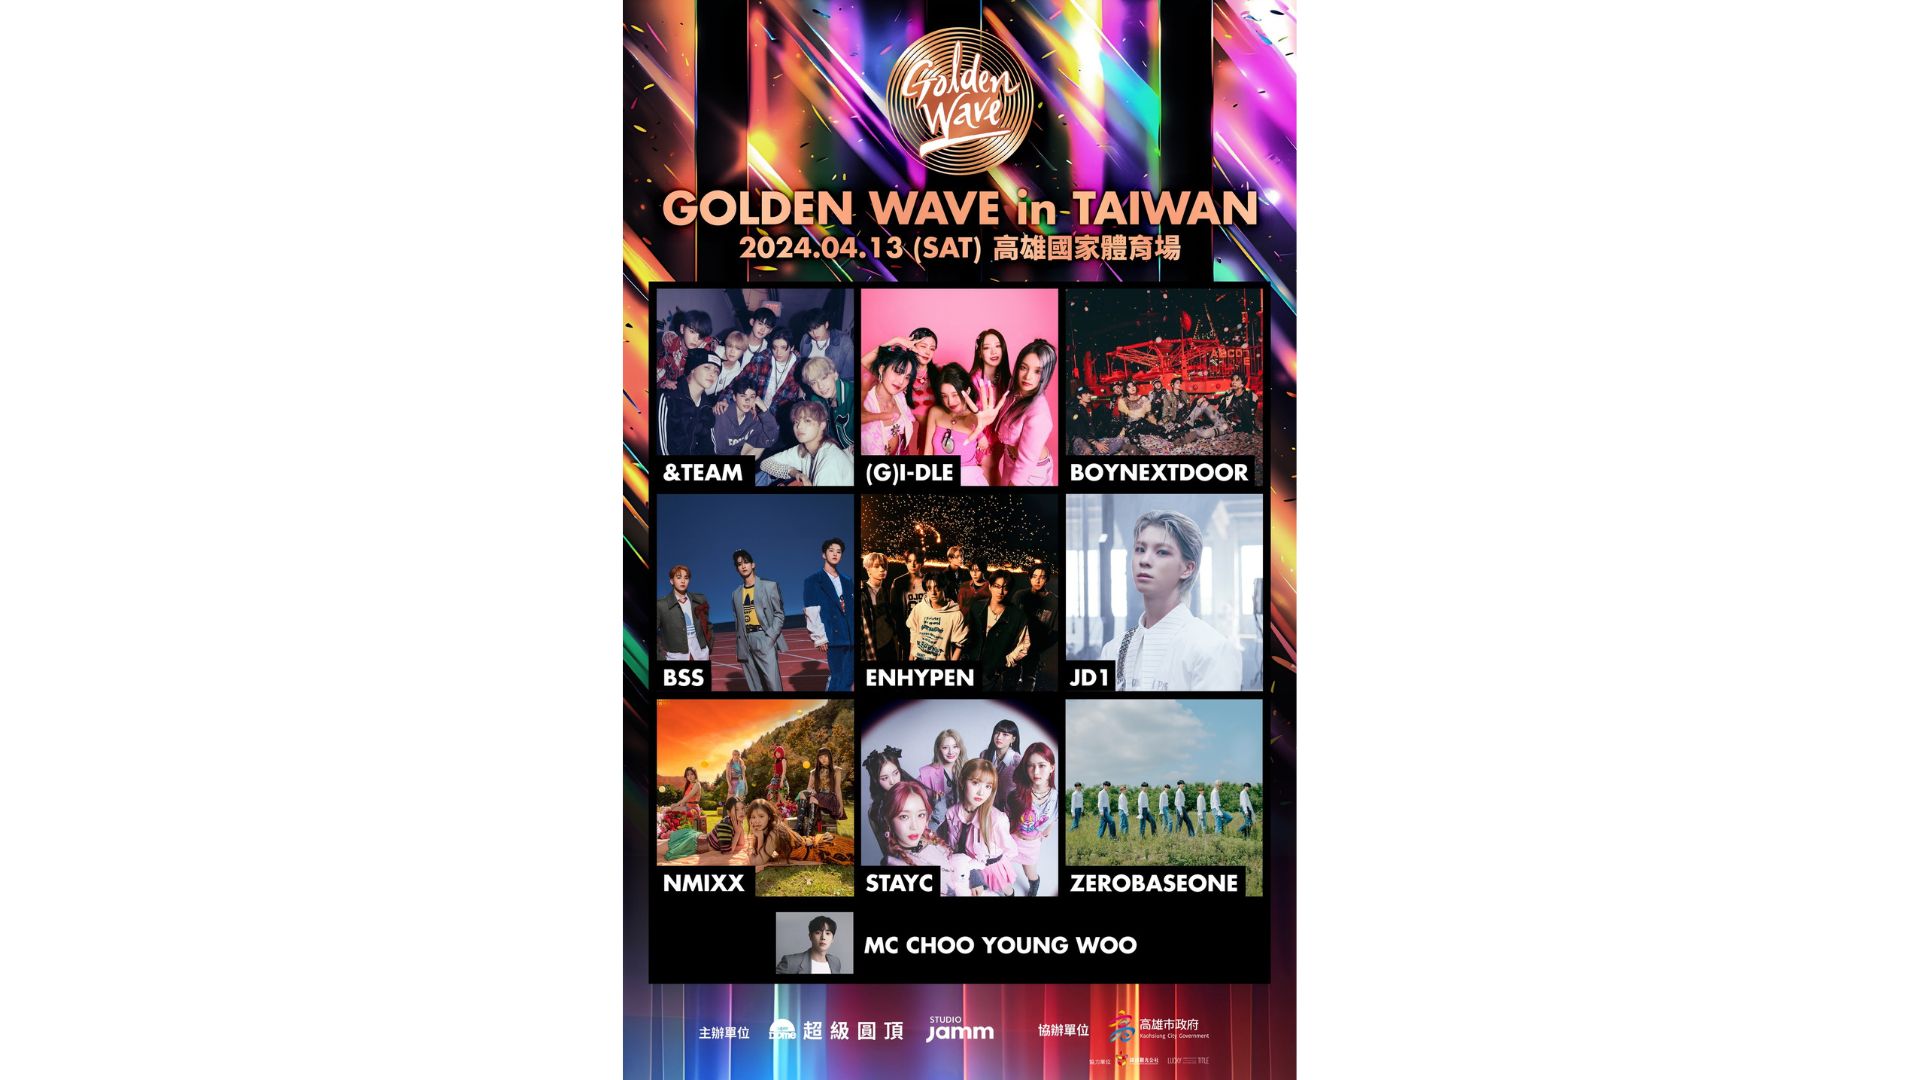 Golden Wave in Taiwan｜演唱會｜高雄世運主場館